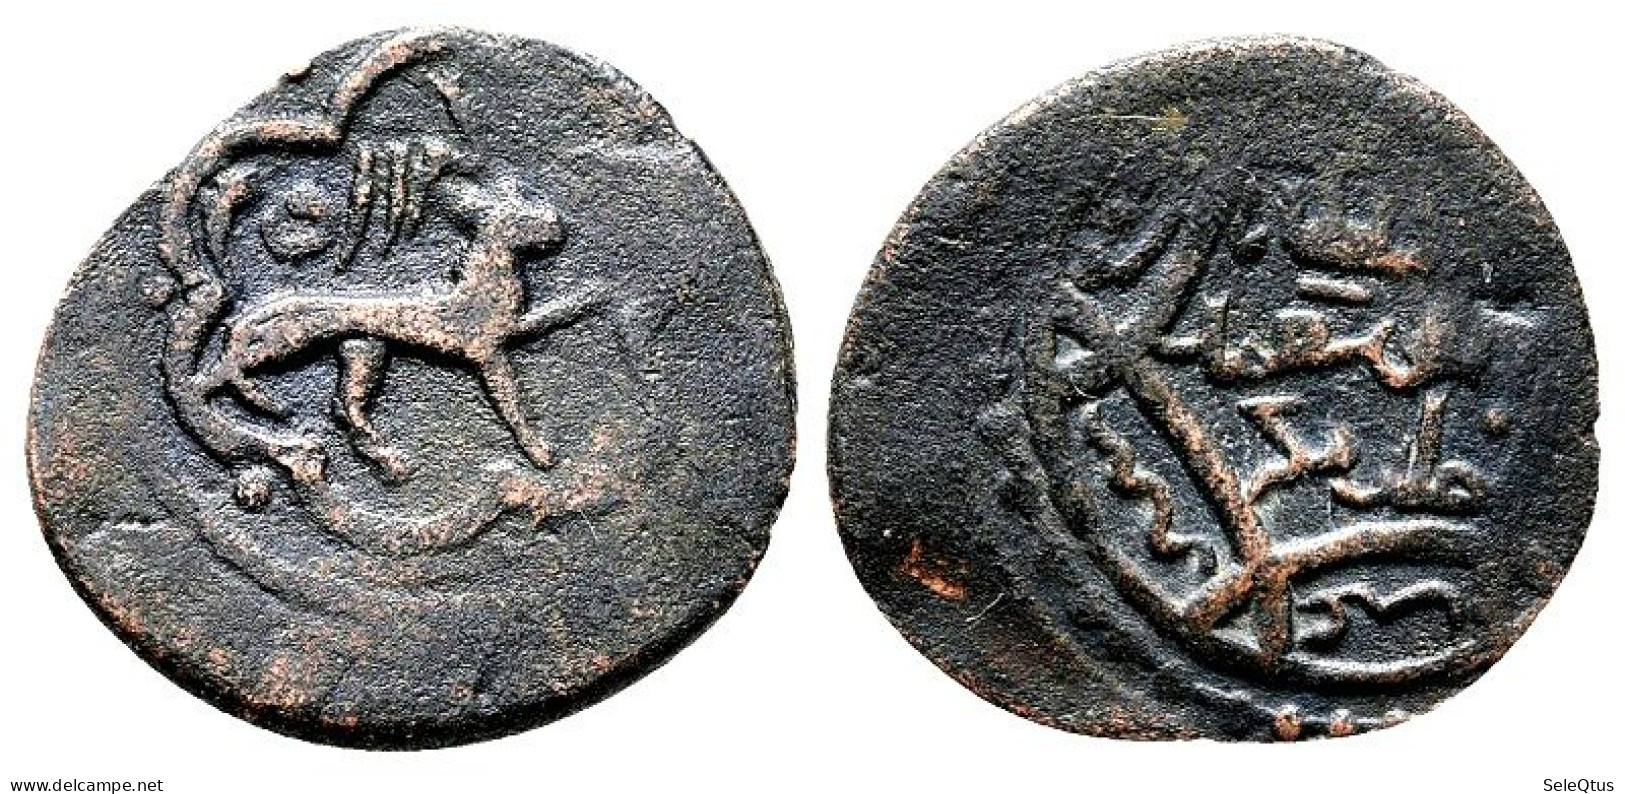 Monedas Antiguas - Ancient Coins (00133-008-0847) - Islamiques